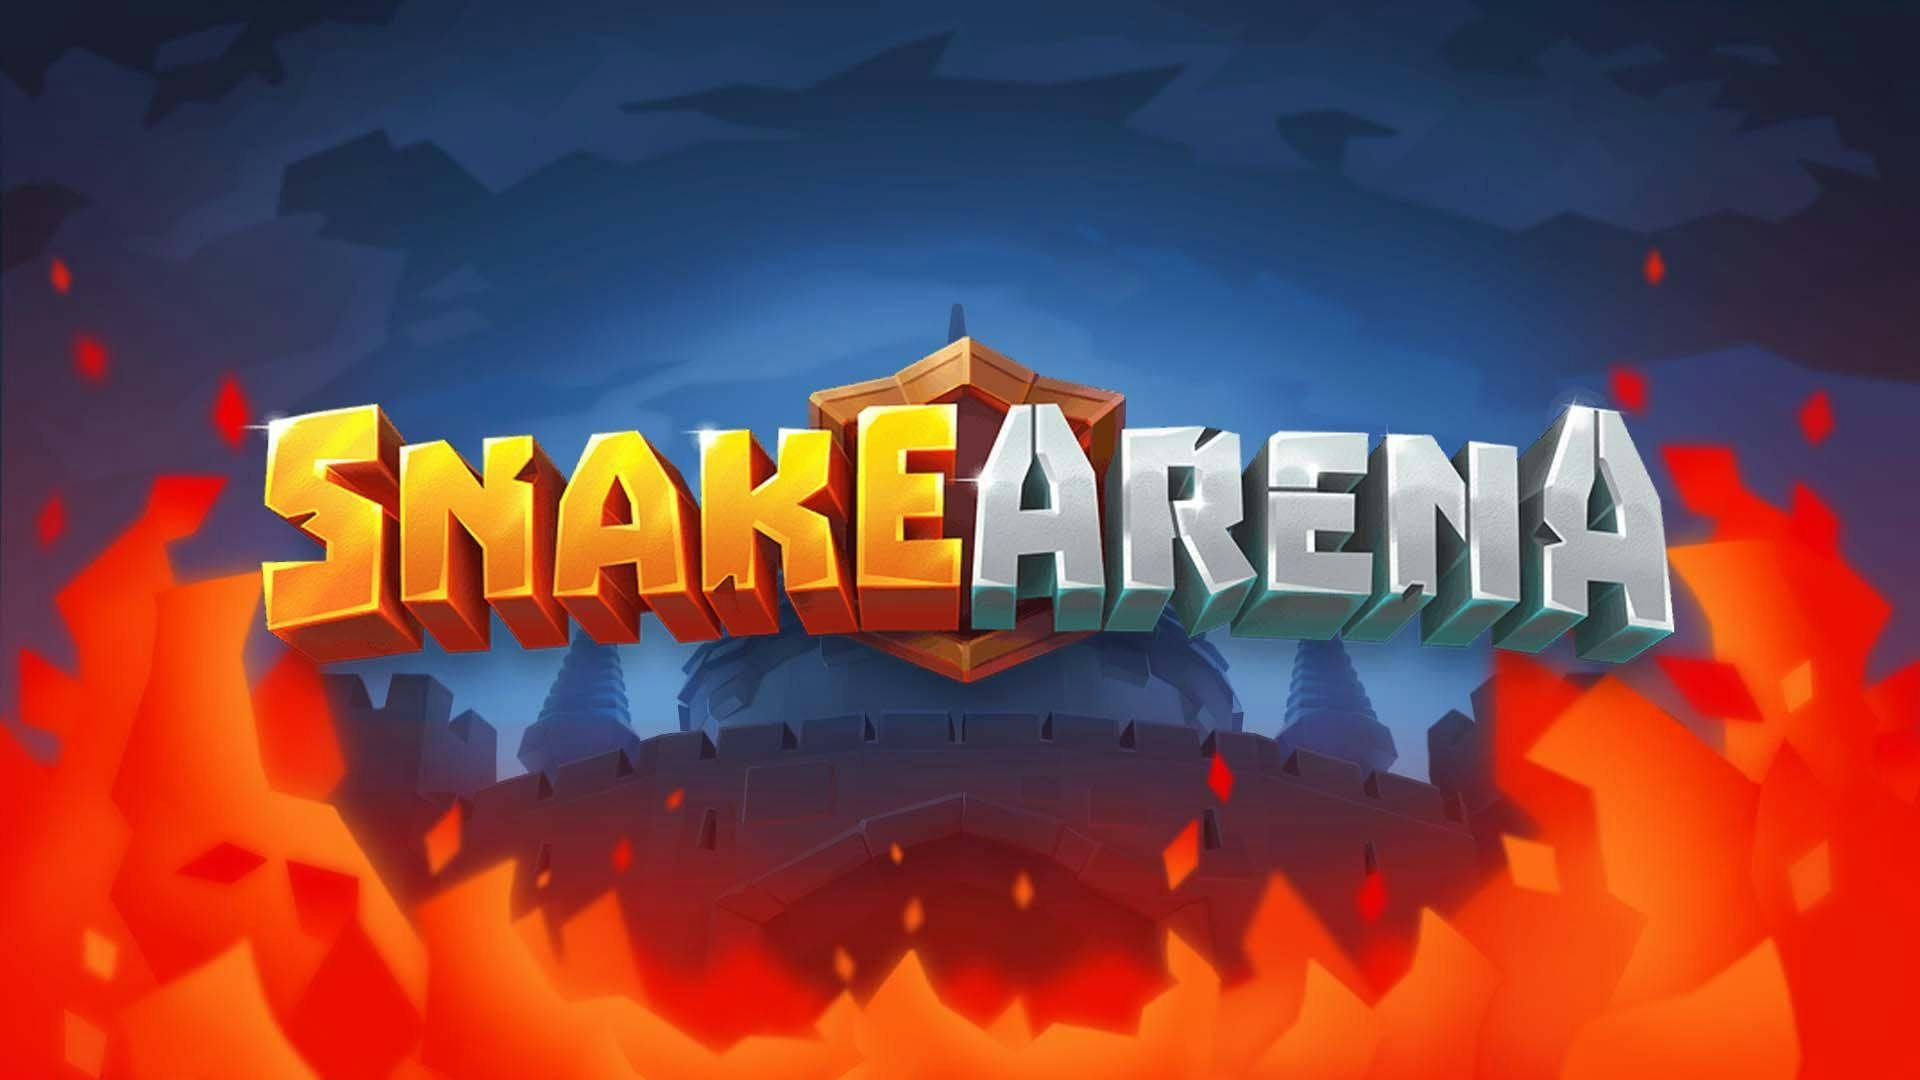 Snake Arena Slot Machine Online Free Game Play